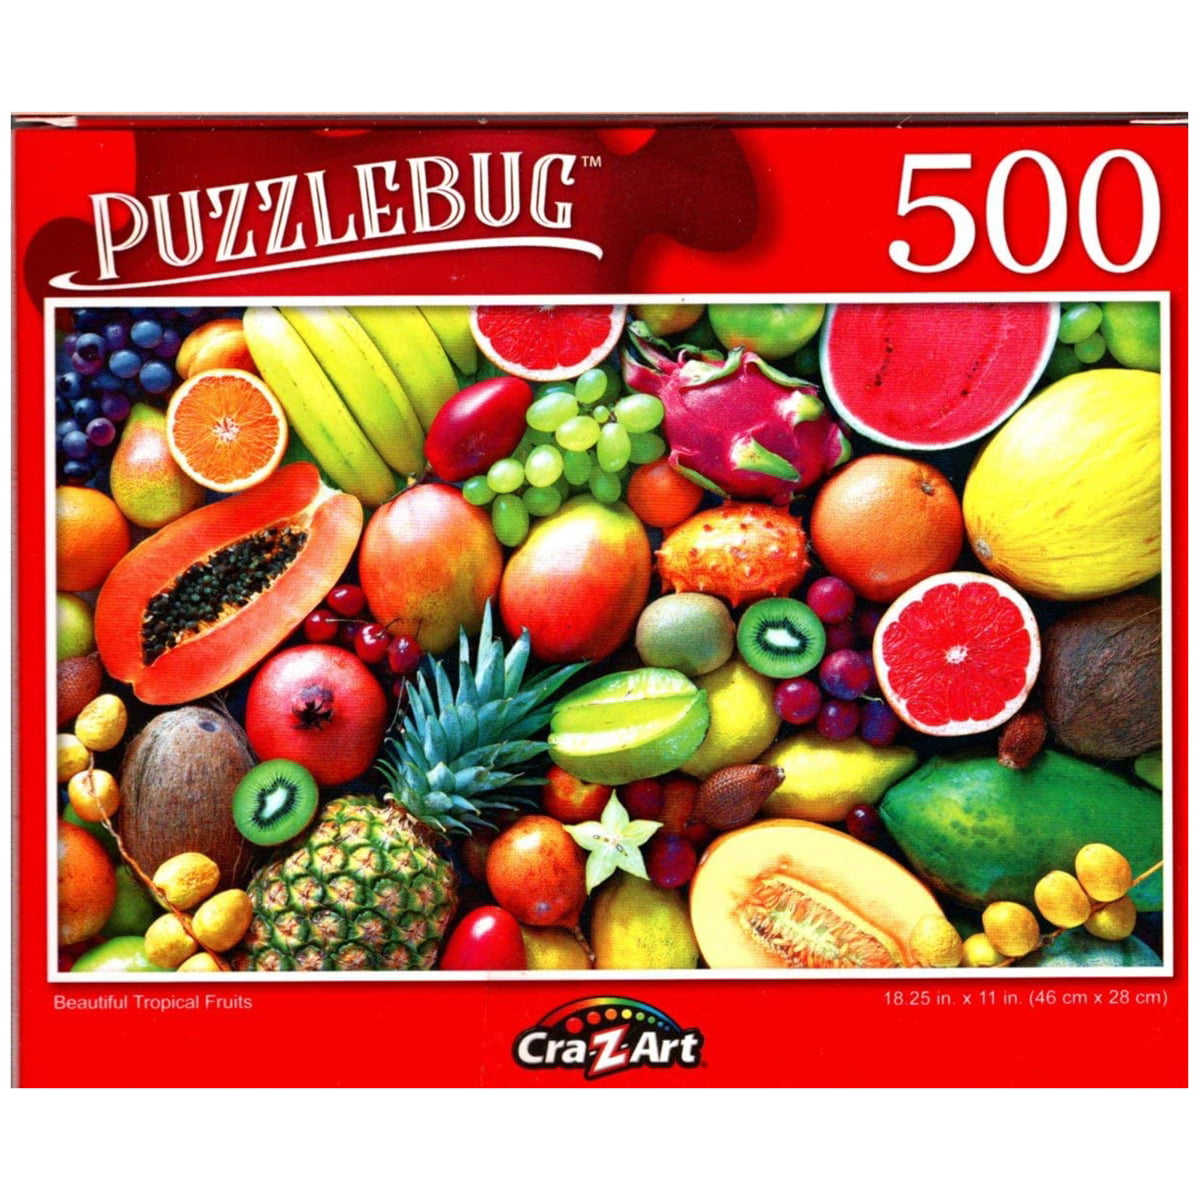 500 Piece Jigsaw Puzzle Puzzlebug 18 x 11 Villeftancho-sur:Mer French Rivera 